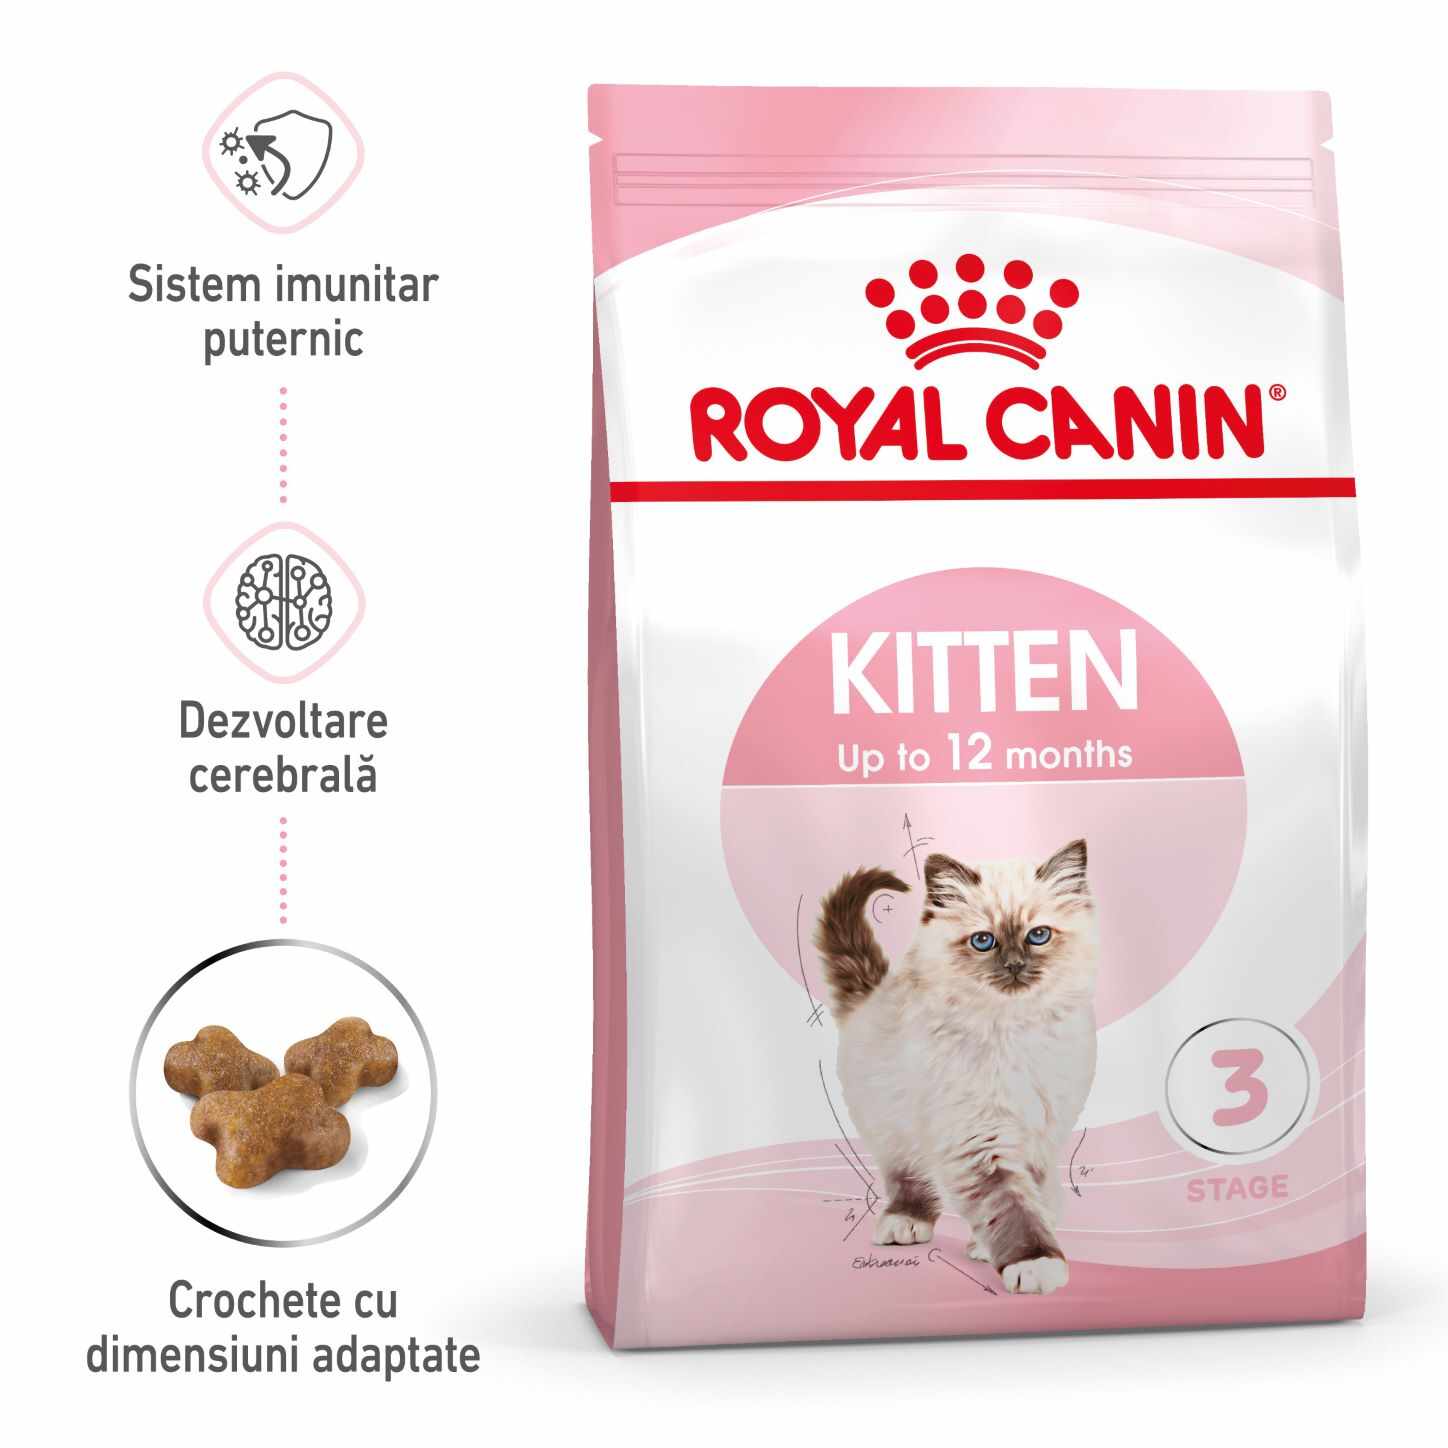 ROYAL CANIN Kitten 10kg